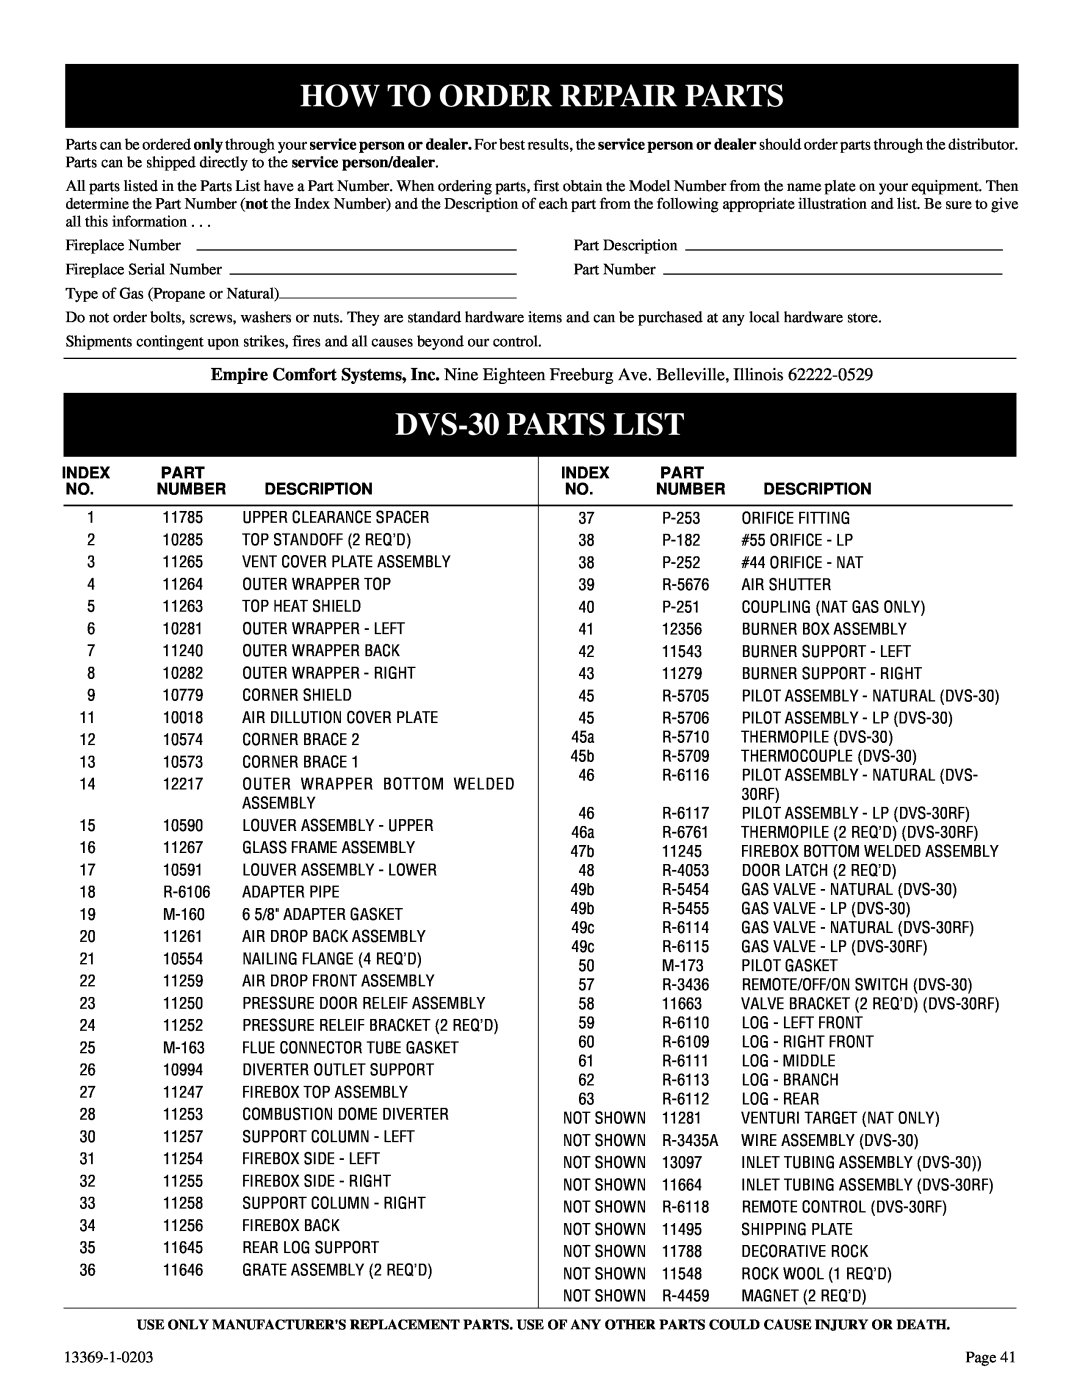 DVS 30-2 installation instructions How To Order Repair Parts, DVS-30PARTS LIST, Index, Number, Description 